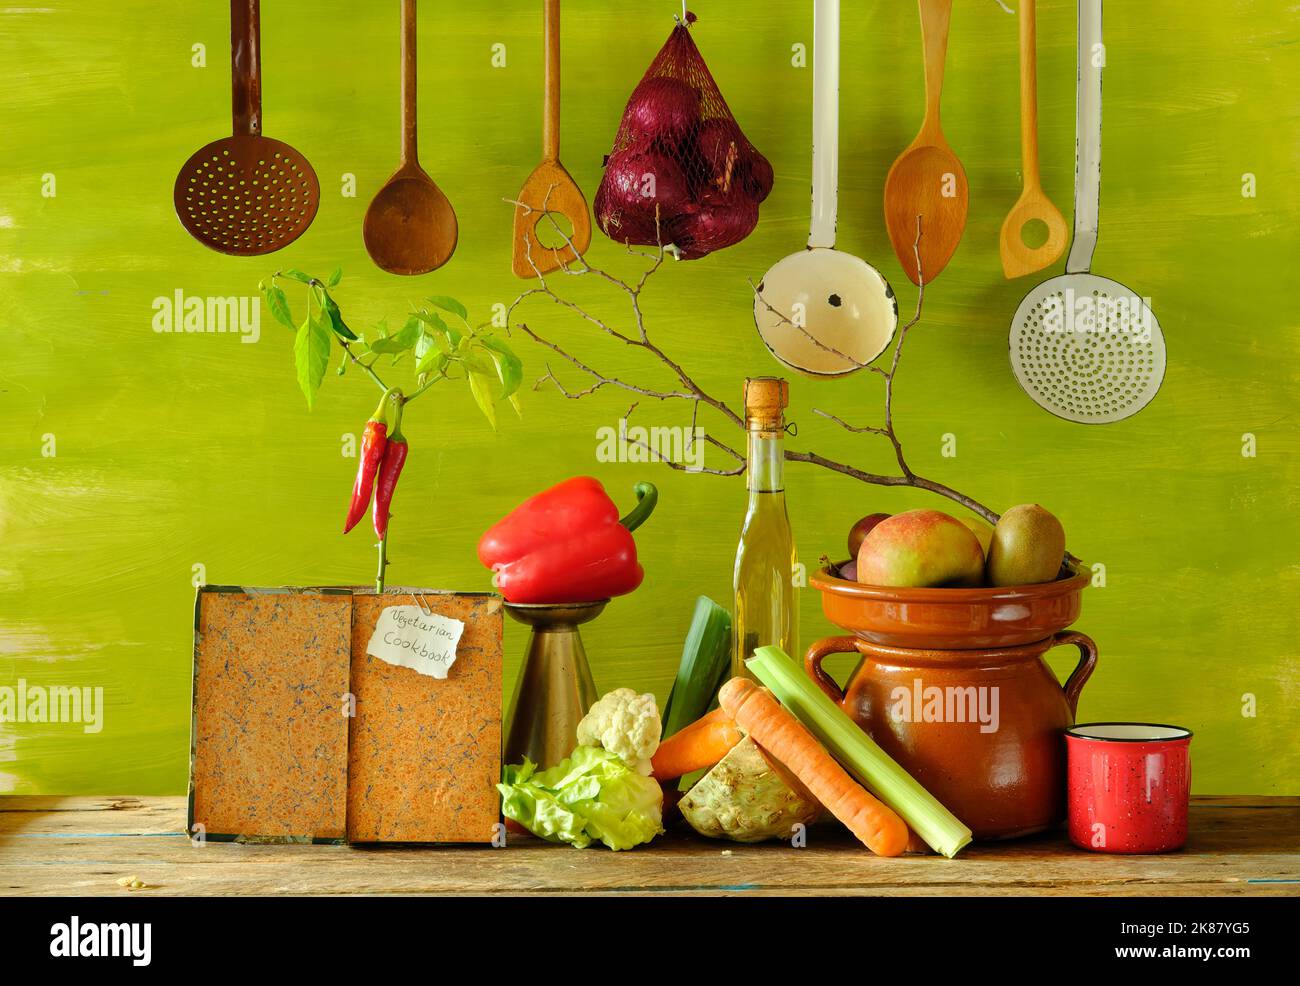 Cucina vegetariana frutta, verdure fresche e utensili da cucina.sana alimentazione, dieta, concetto di cibo vegetariano. Foto Stock